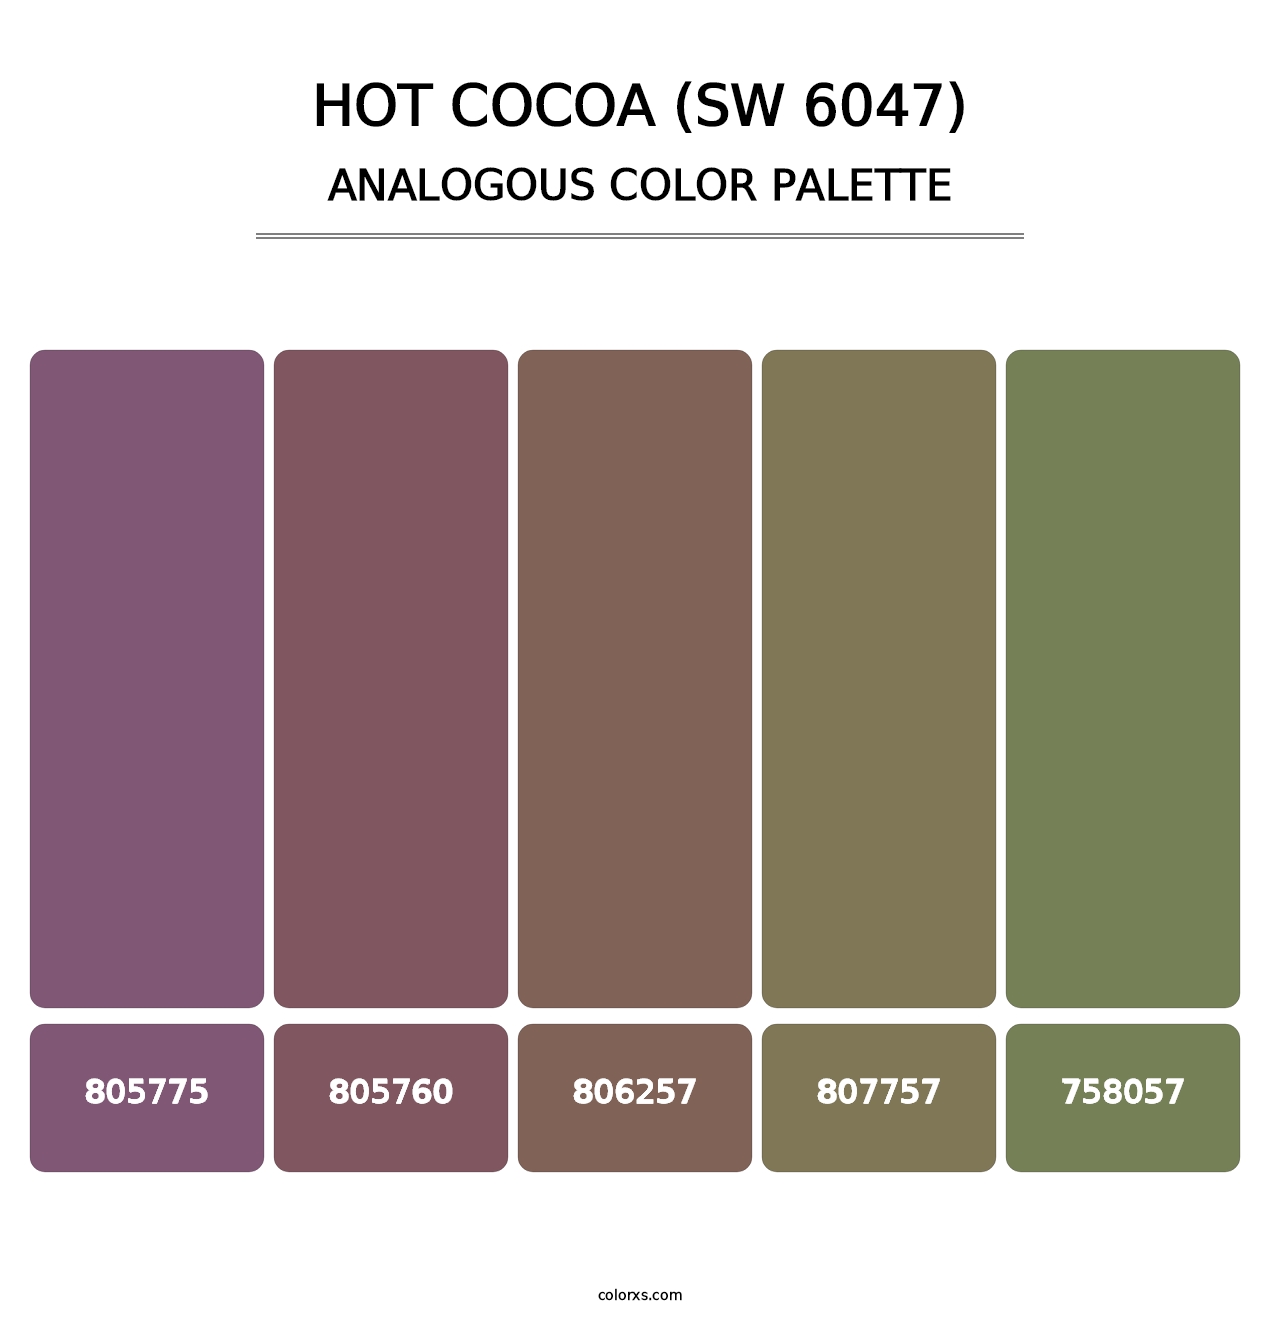 Hot Cocoa (SW 6047) - Analogous Color Palette